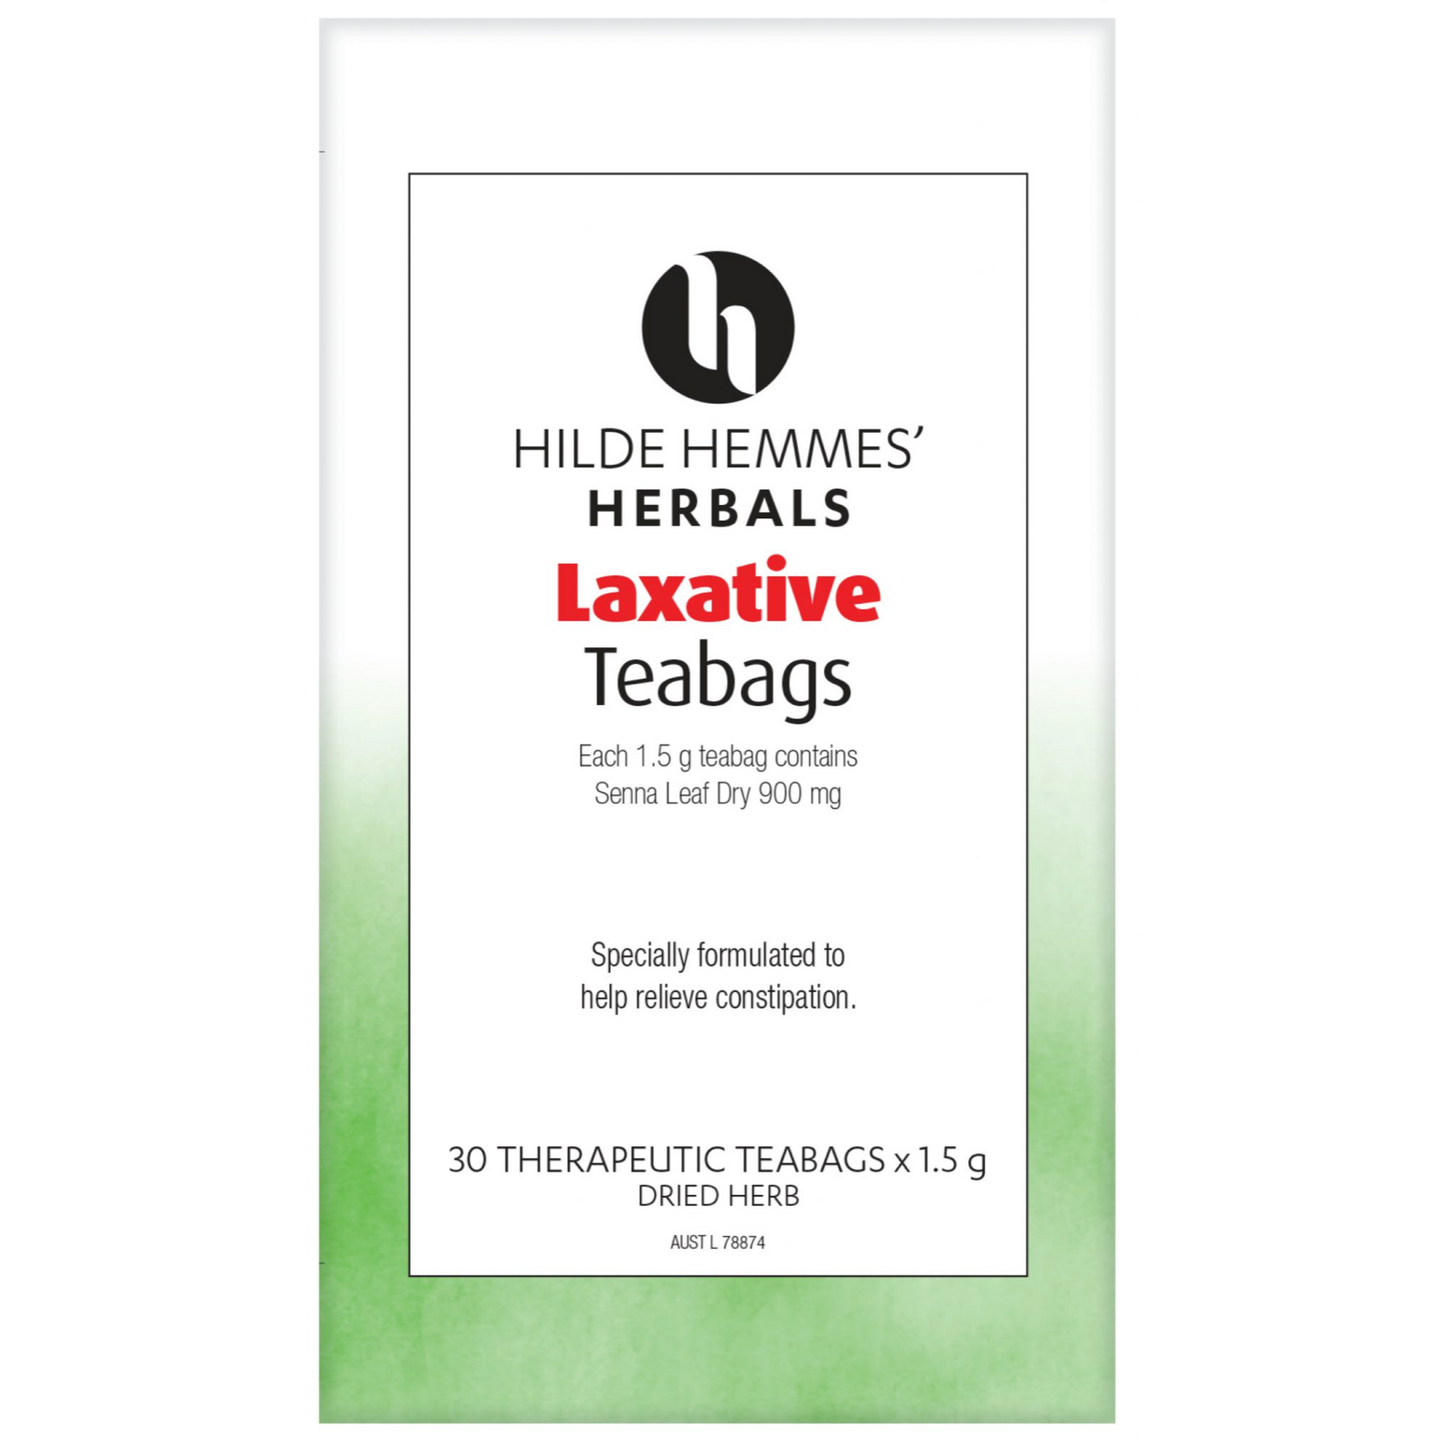 Hilde Hemmes Herbal's Laxative Mix, 30 Tea Bags